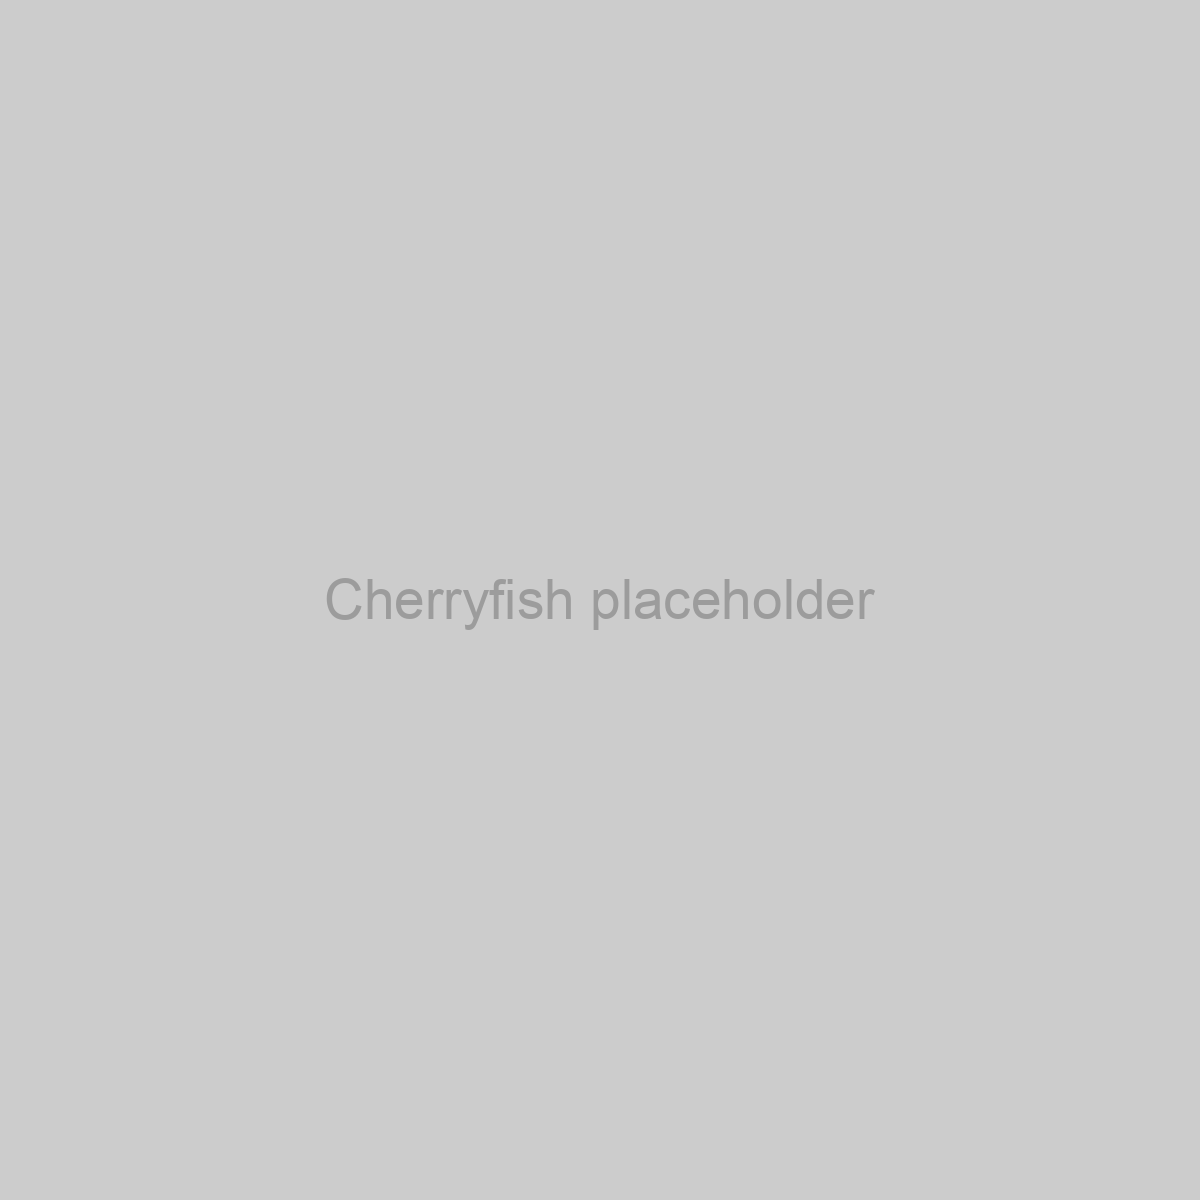 Cherryfish Placeholder Image